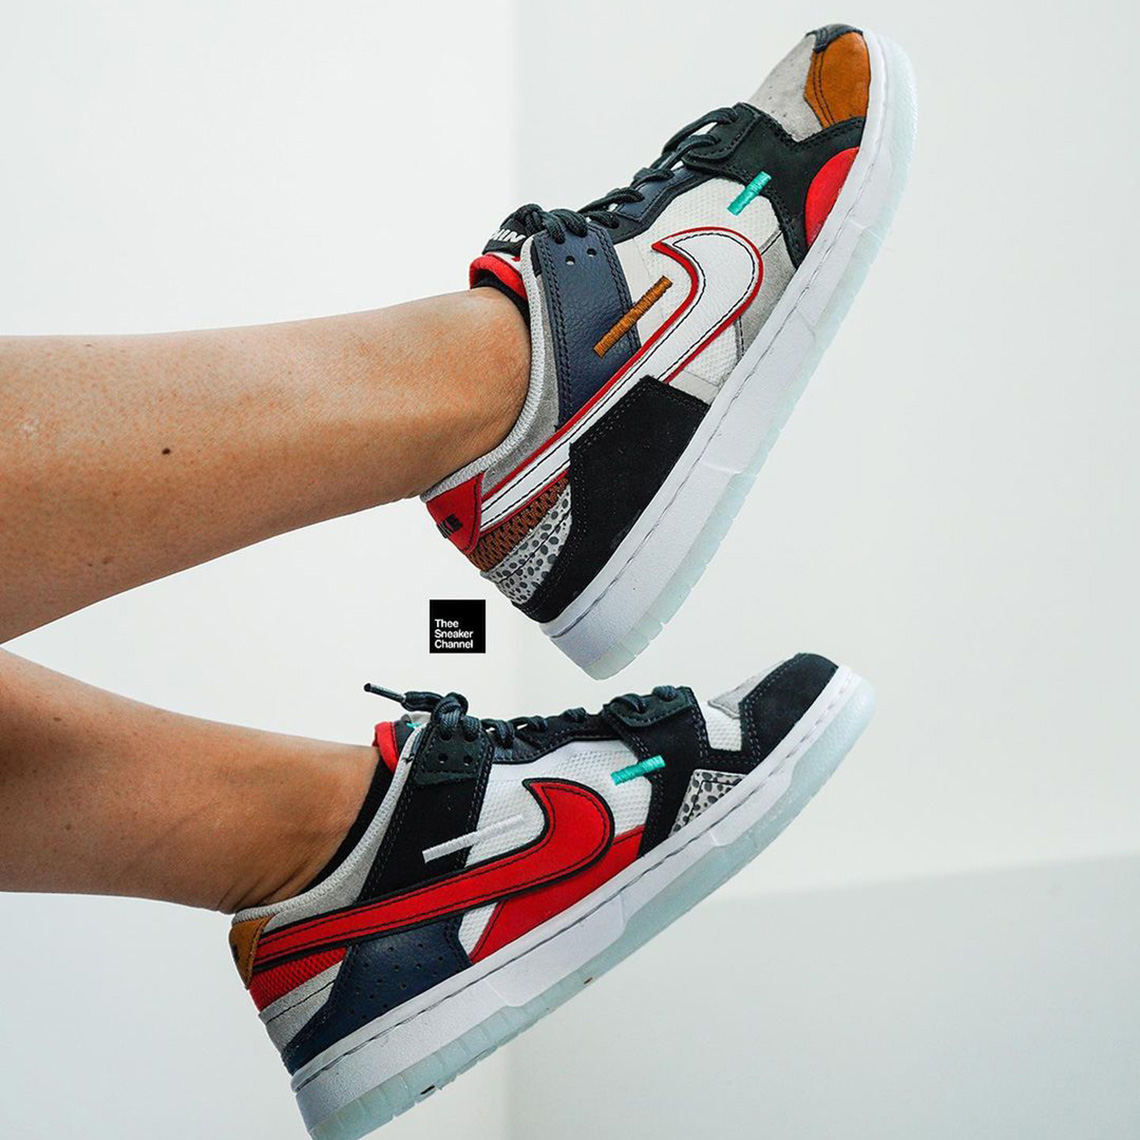 Nike Dunk Low Scrap Safari Release Info + Photos | SneakerNews.com